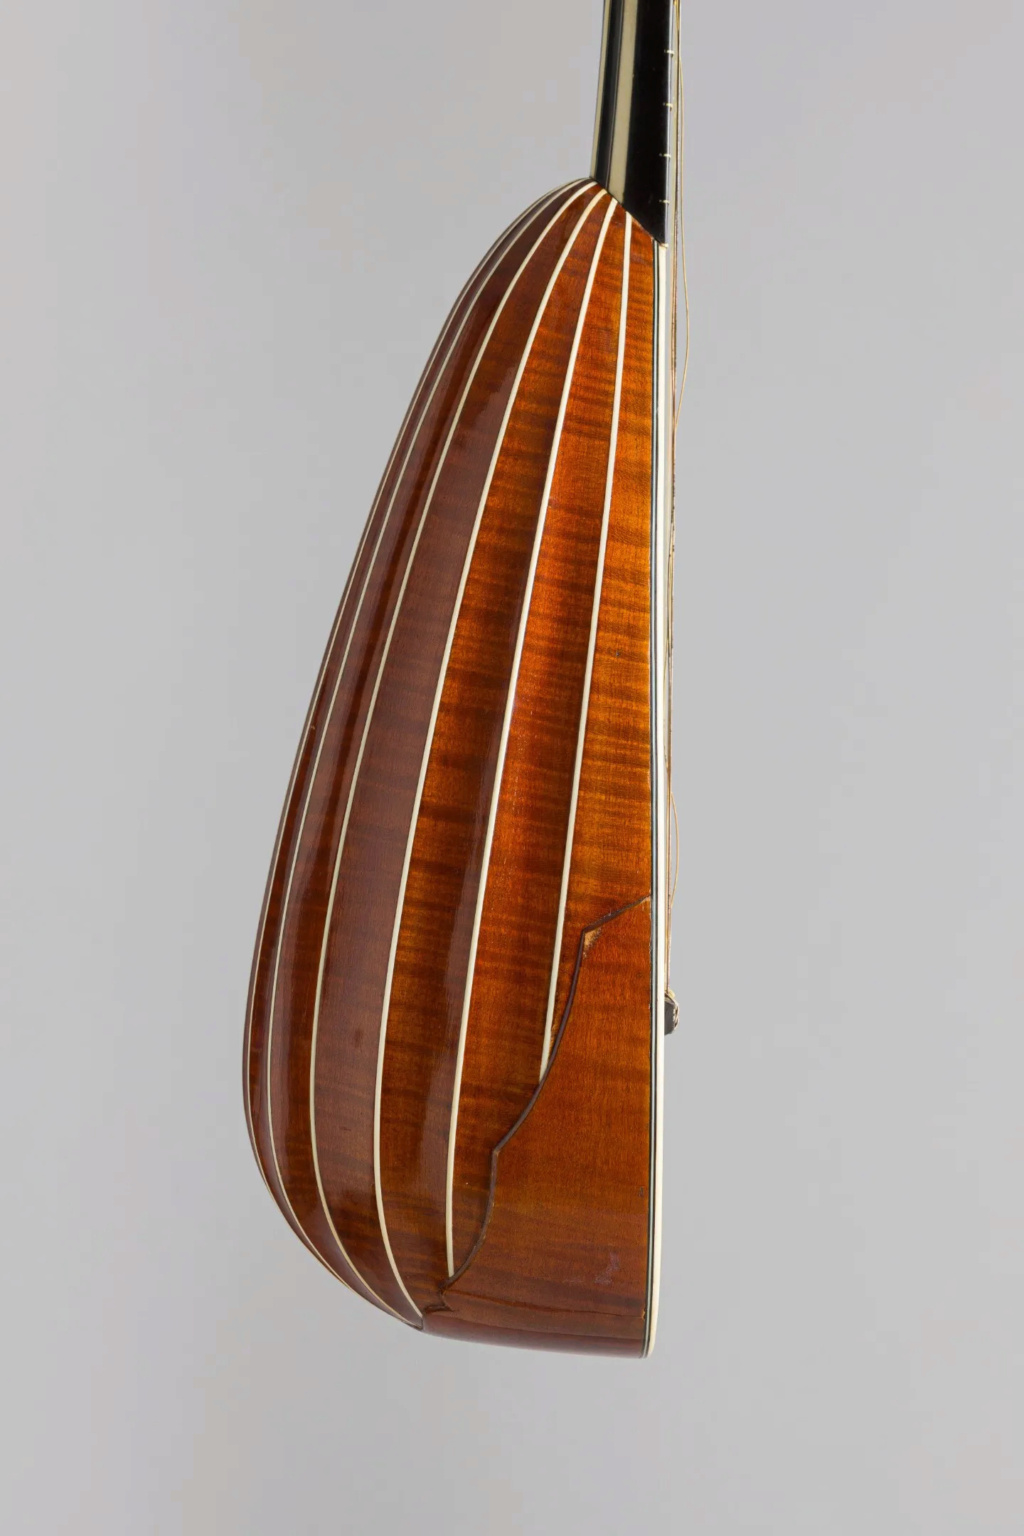 La mandoline au XVIIIe siècle Telech17